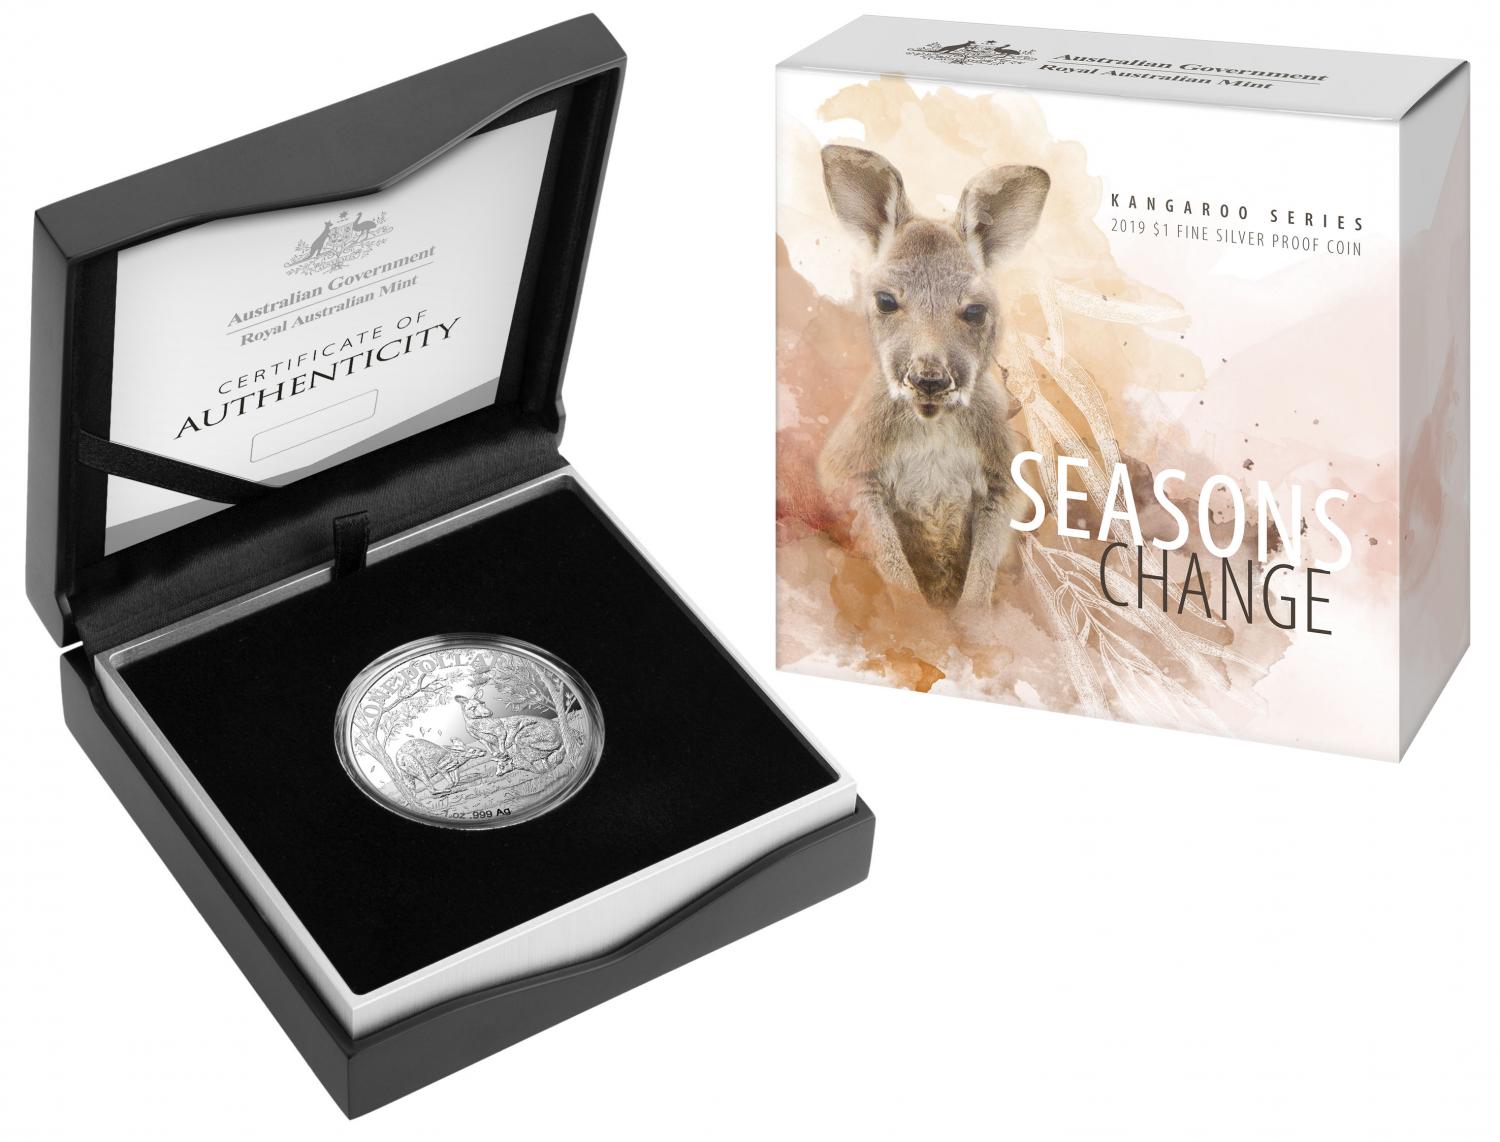 Thumbnail for 2019 $1 Fine Silver Proof Coin - Kangaroo Series Seasons Change